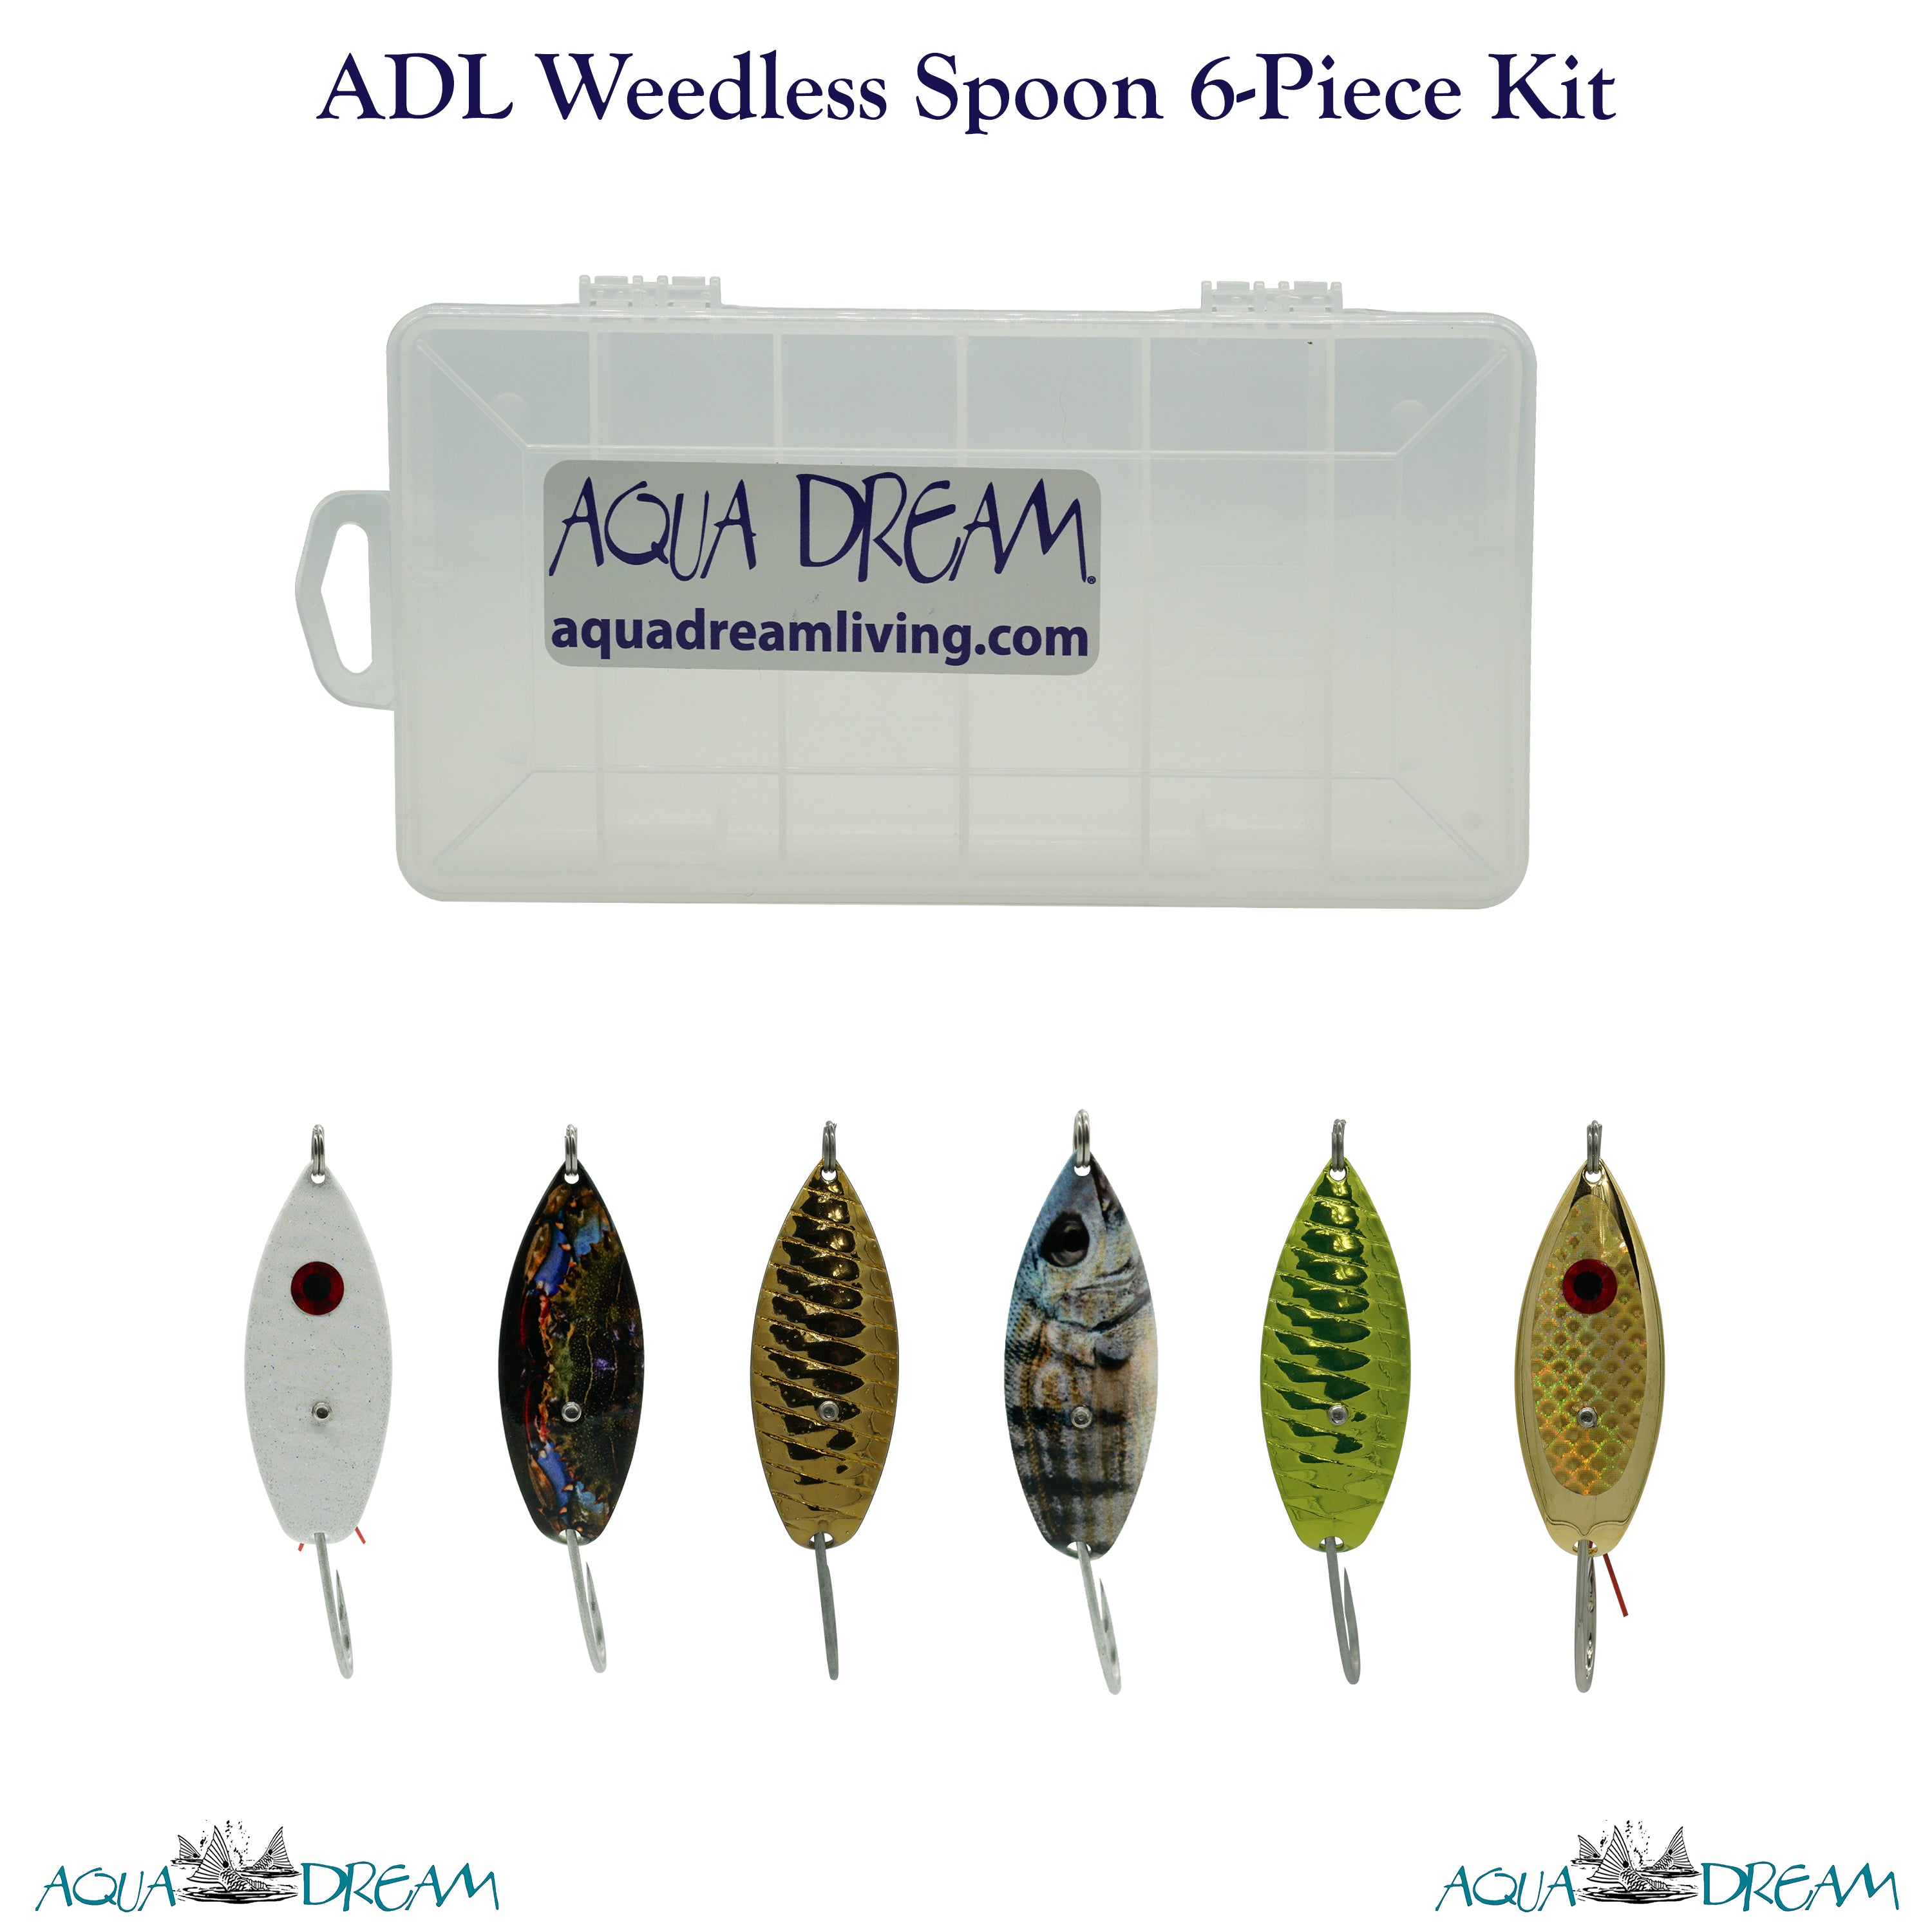 Special Edition Tournament Series Weedless Spoon Kit – Aqua Dream